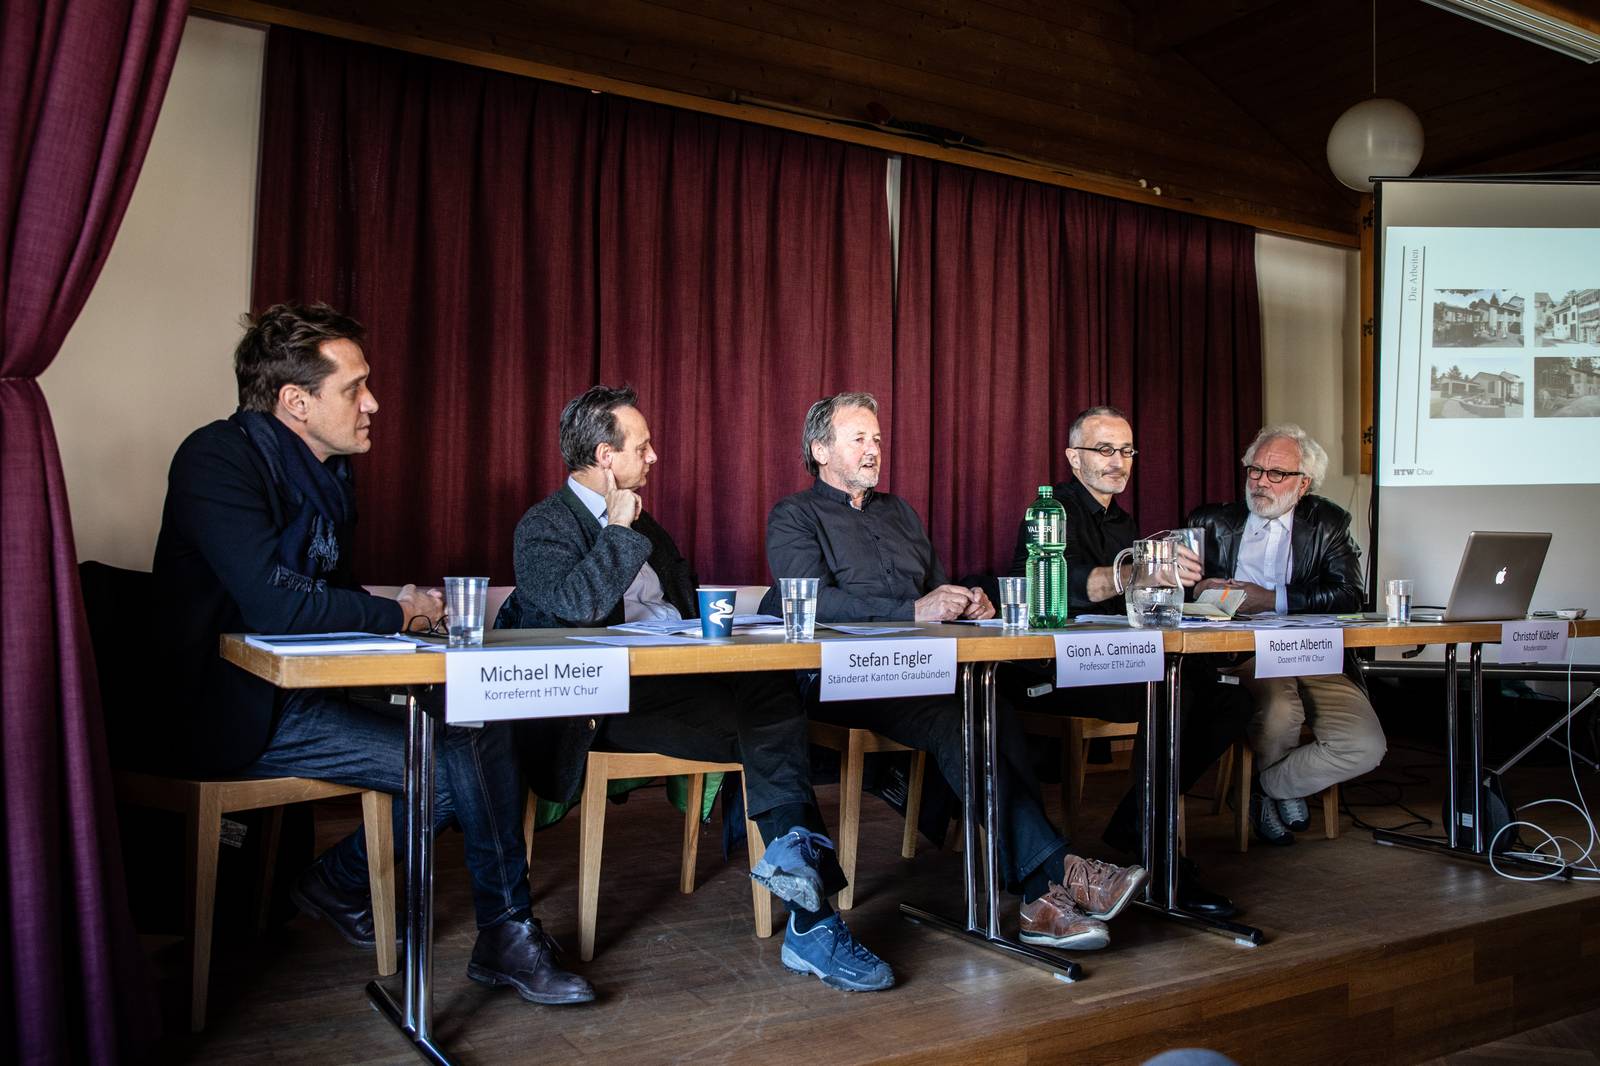 Podiumsgespräch mit Christof Kübler, Robert Albertin, Gion A. Caminada, Stefan Engler und Michael Meier